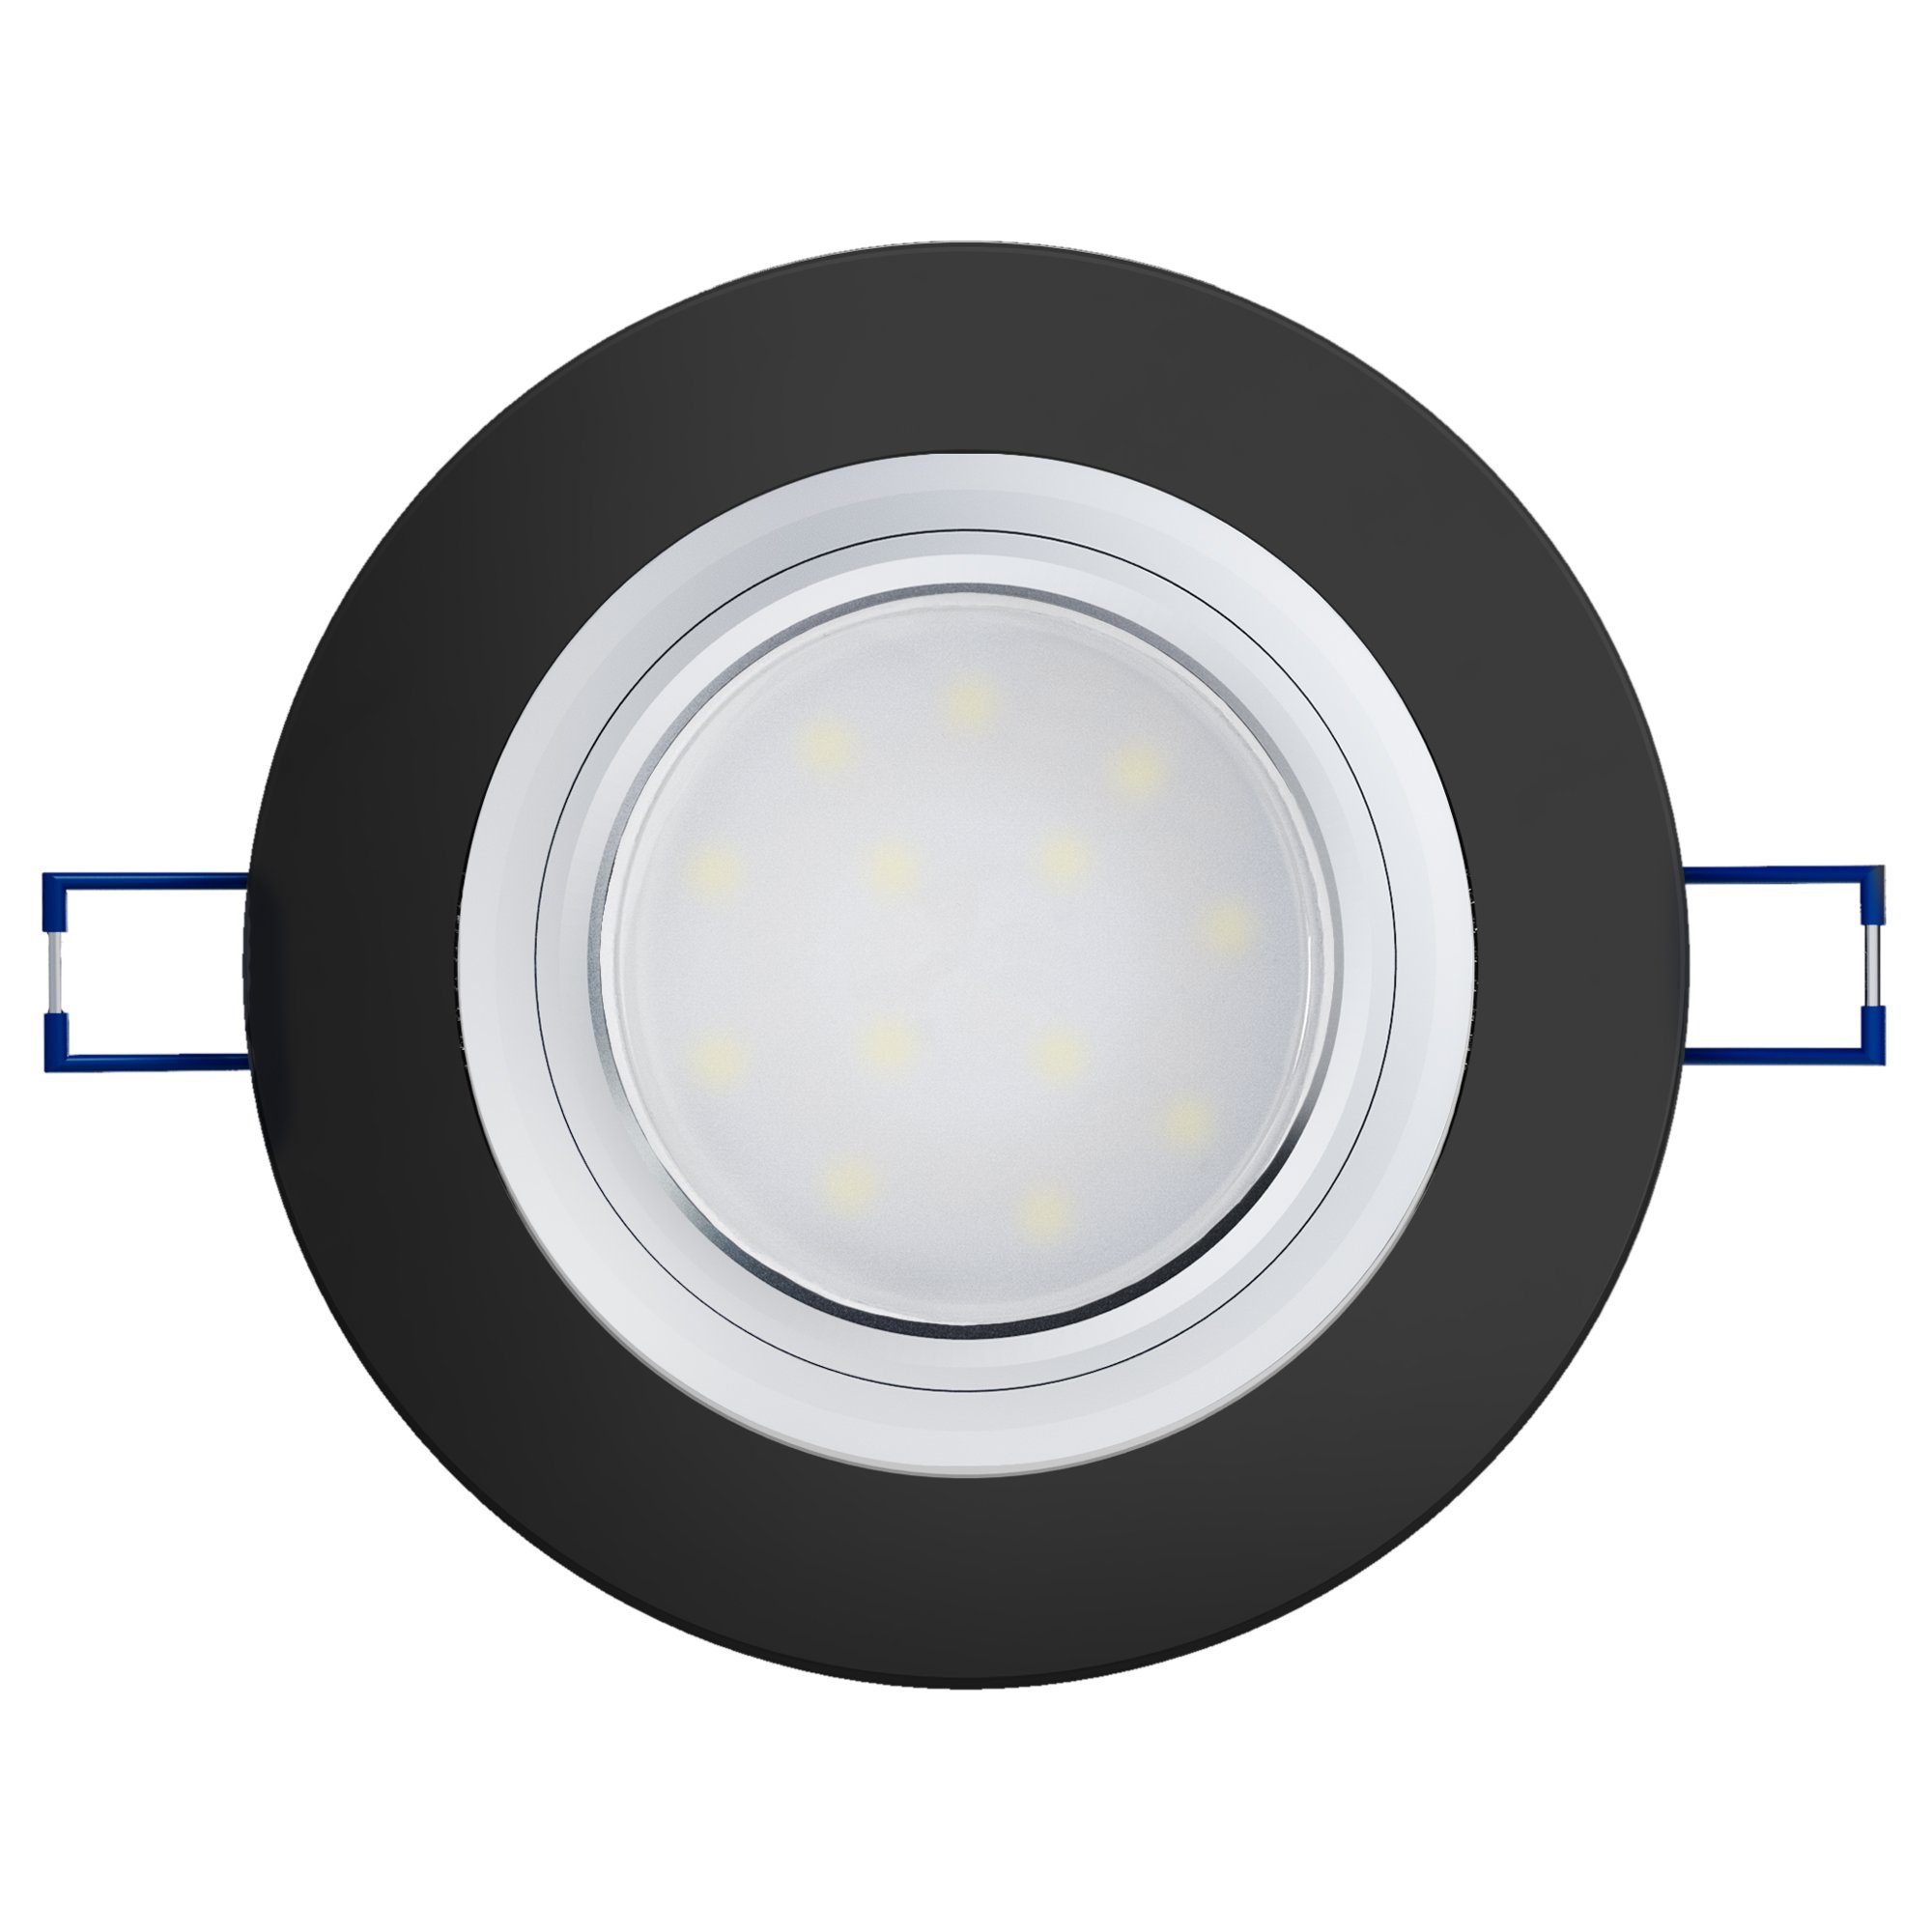 Einbaustrahler rund mit flach 230V, SSC-LUXon Modul LED Neutralweiß LED Einbaustrahler LED Glas & extra schwarz